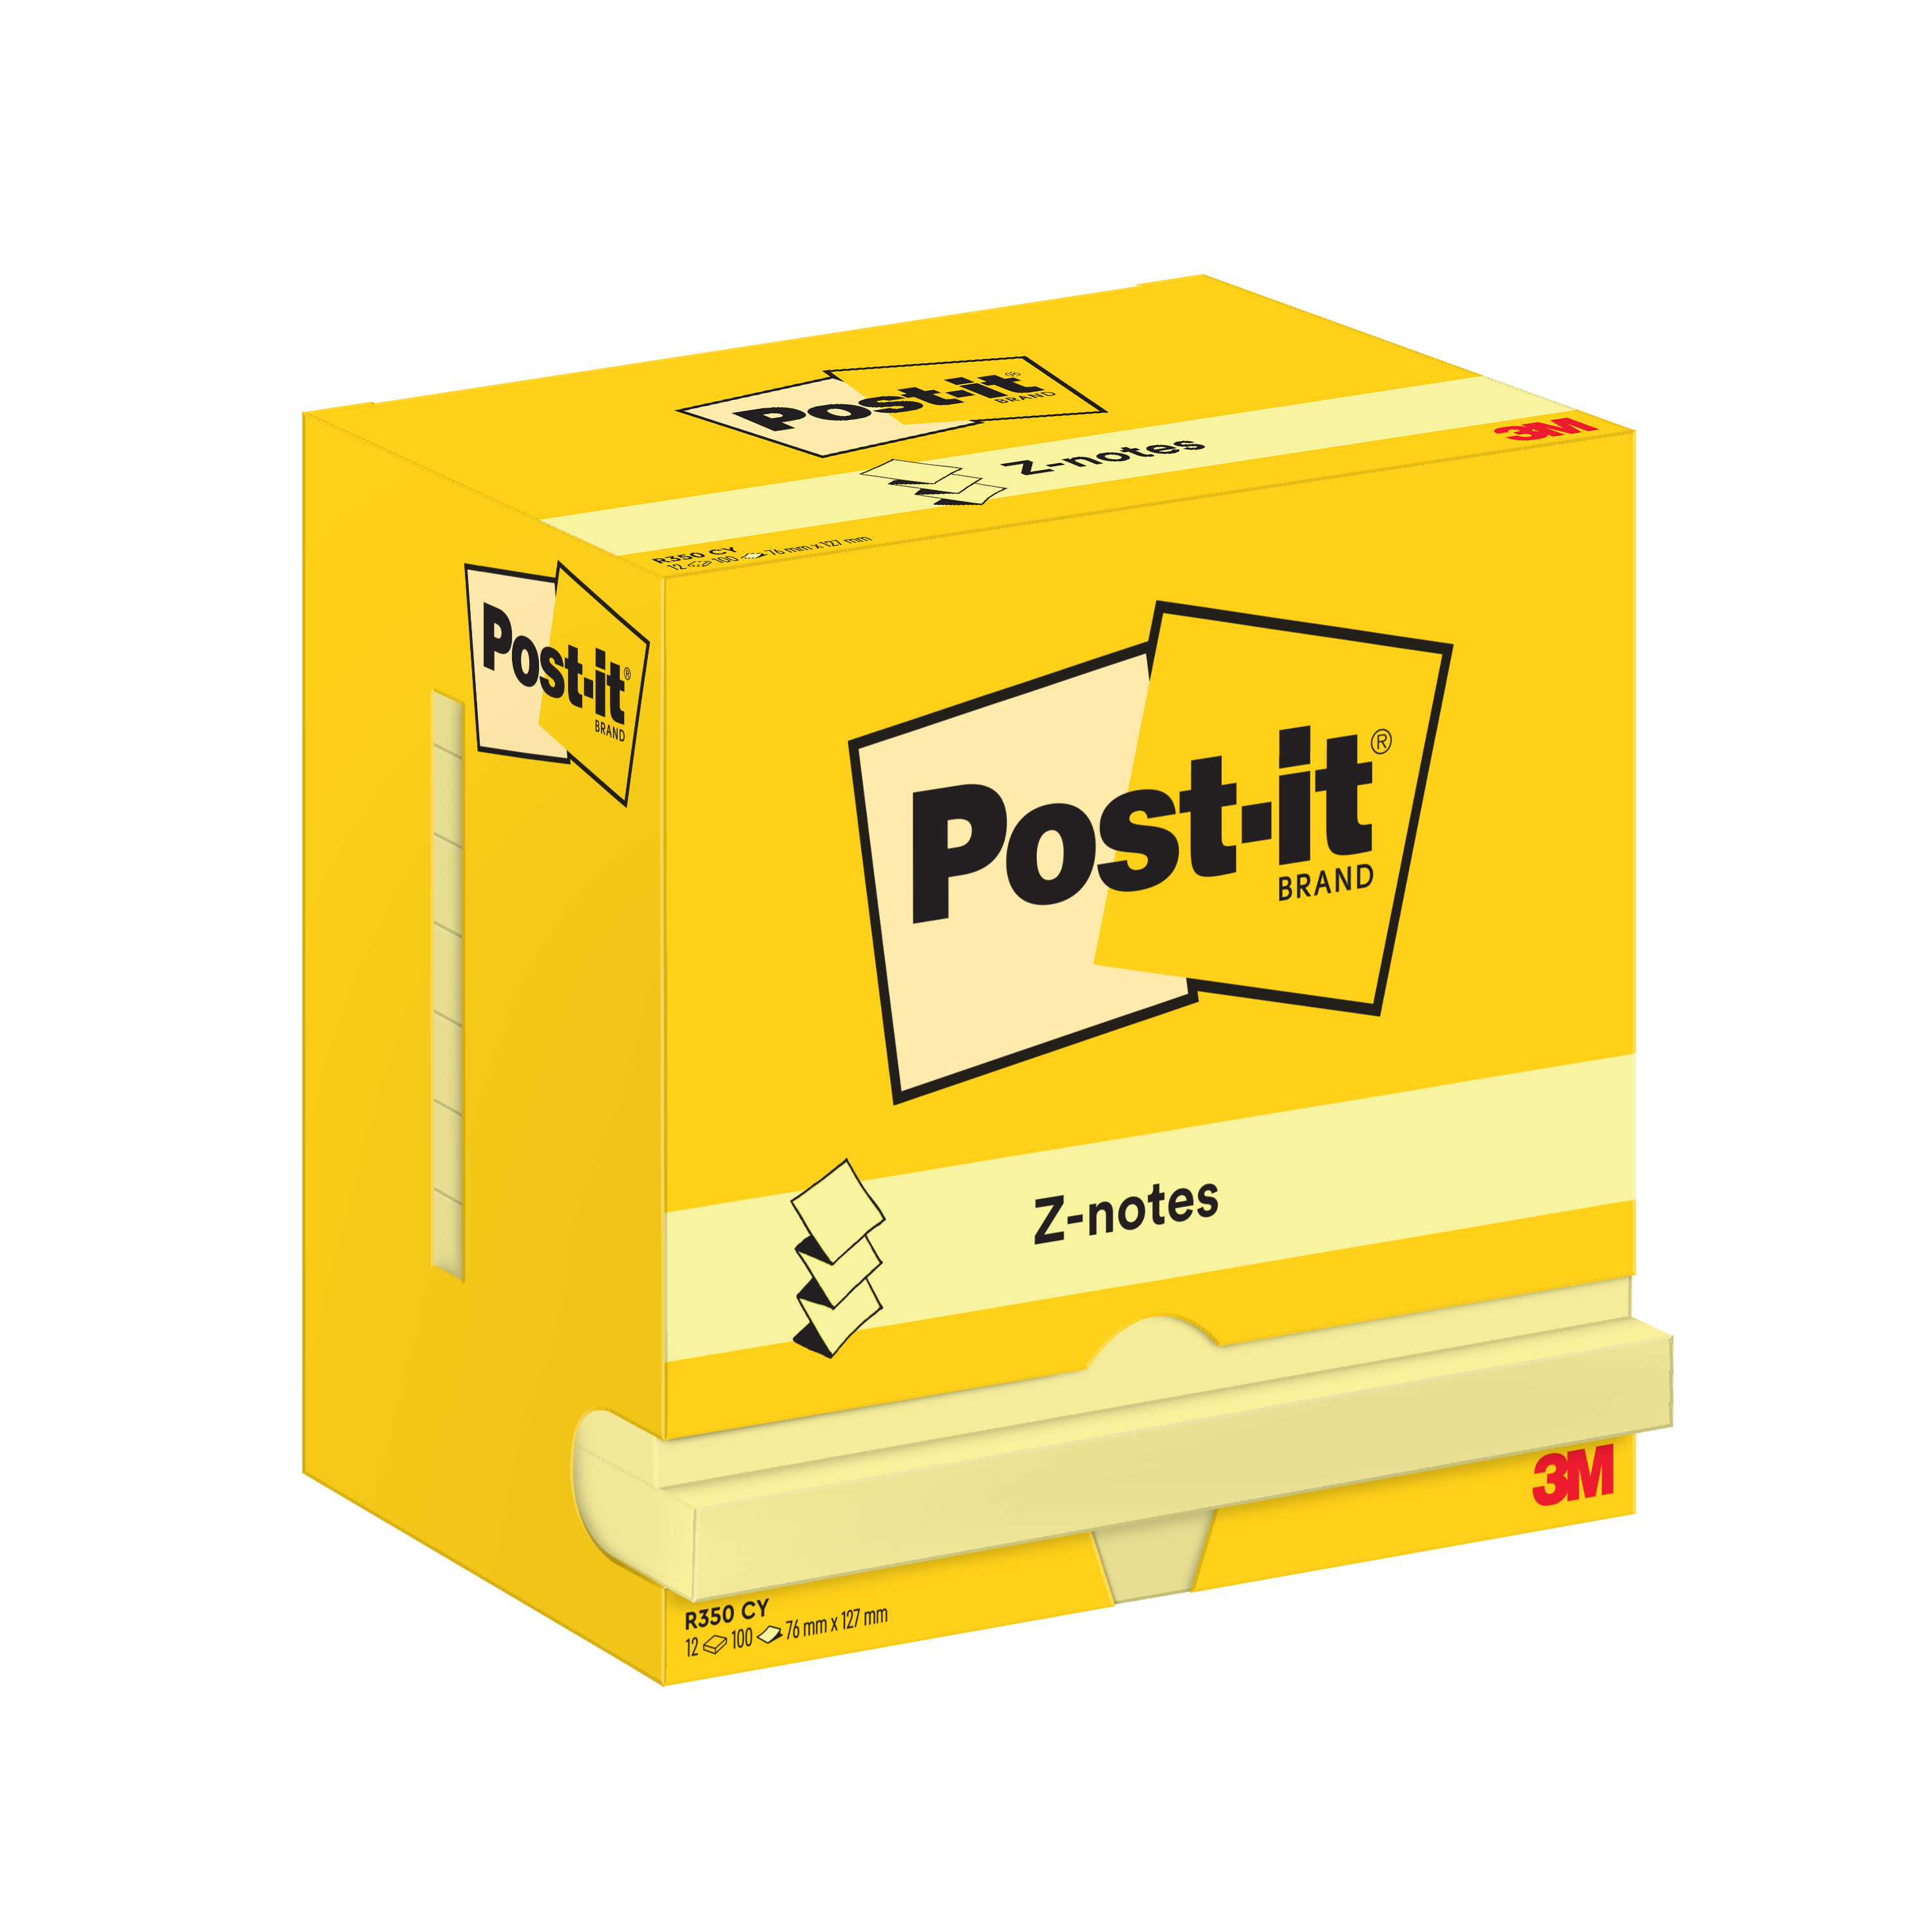 POST-IT Z-Notes 127x76mm R350 CY jaune 12x100 feuilles